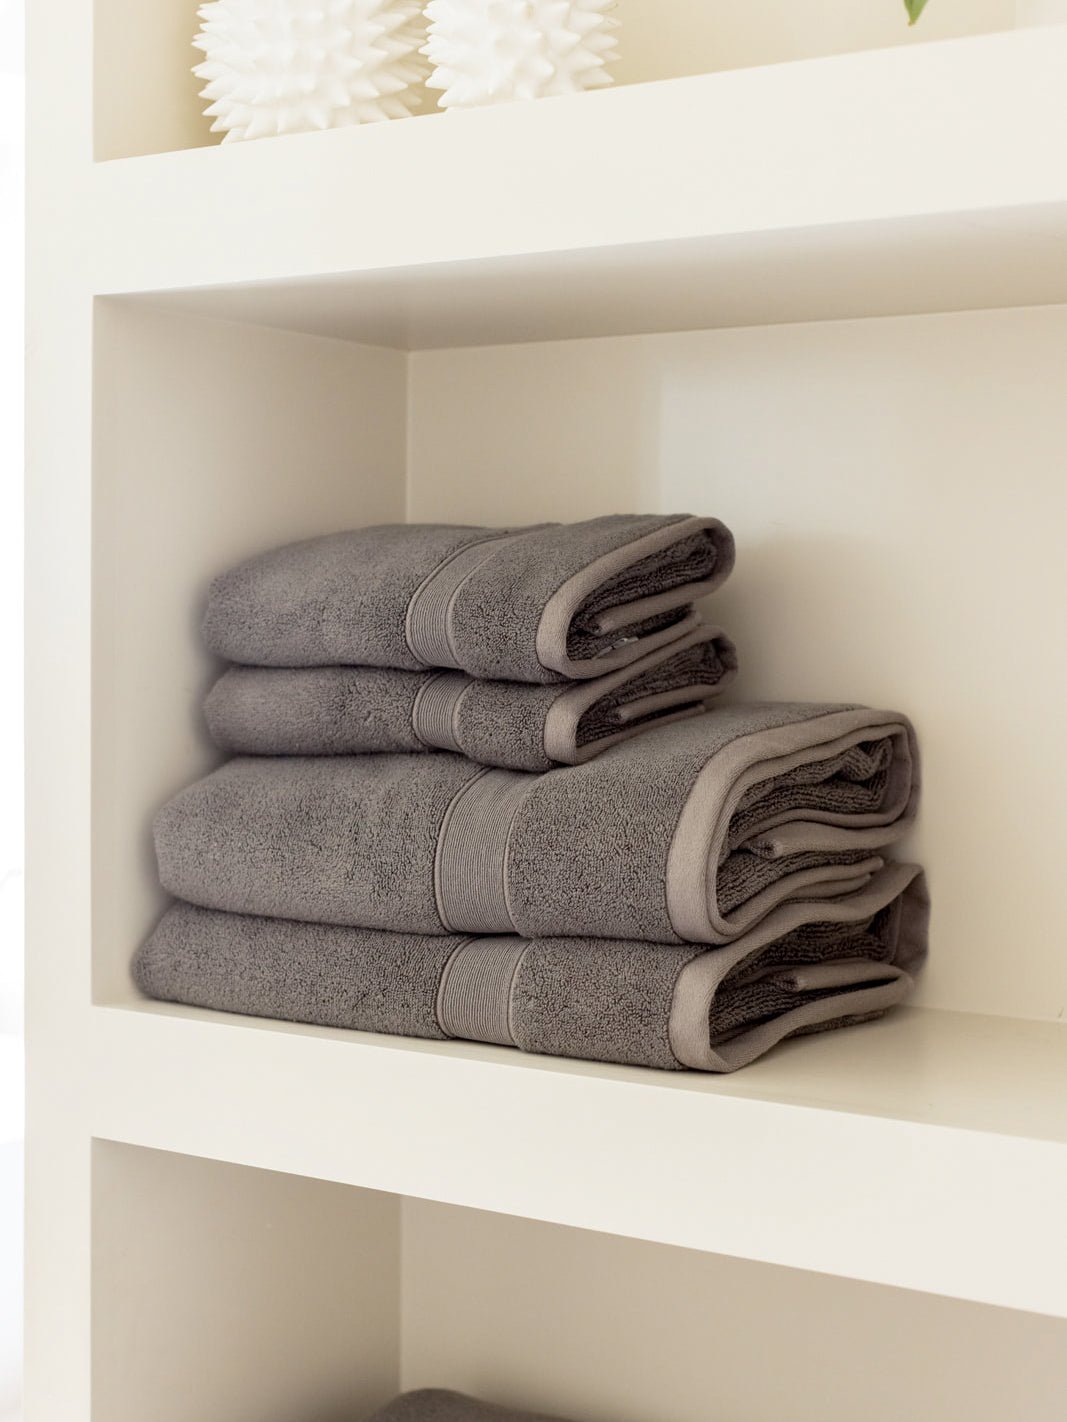 Charcoal hand and bath towels folded on shelf |Color:Charcoal